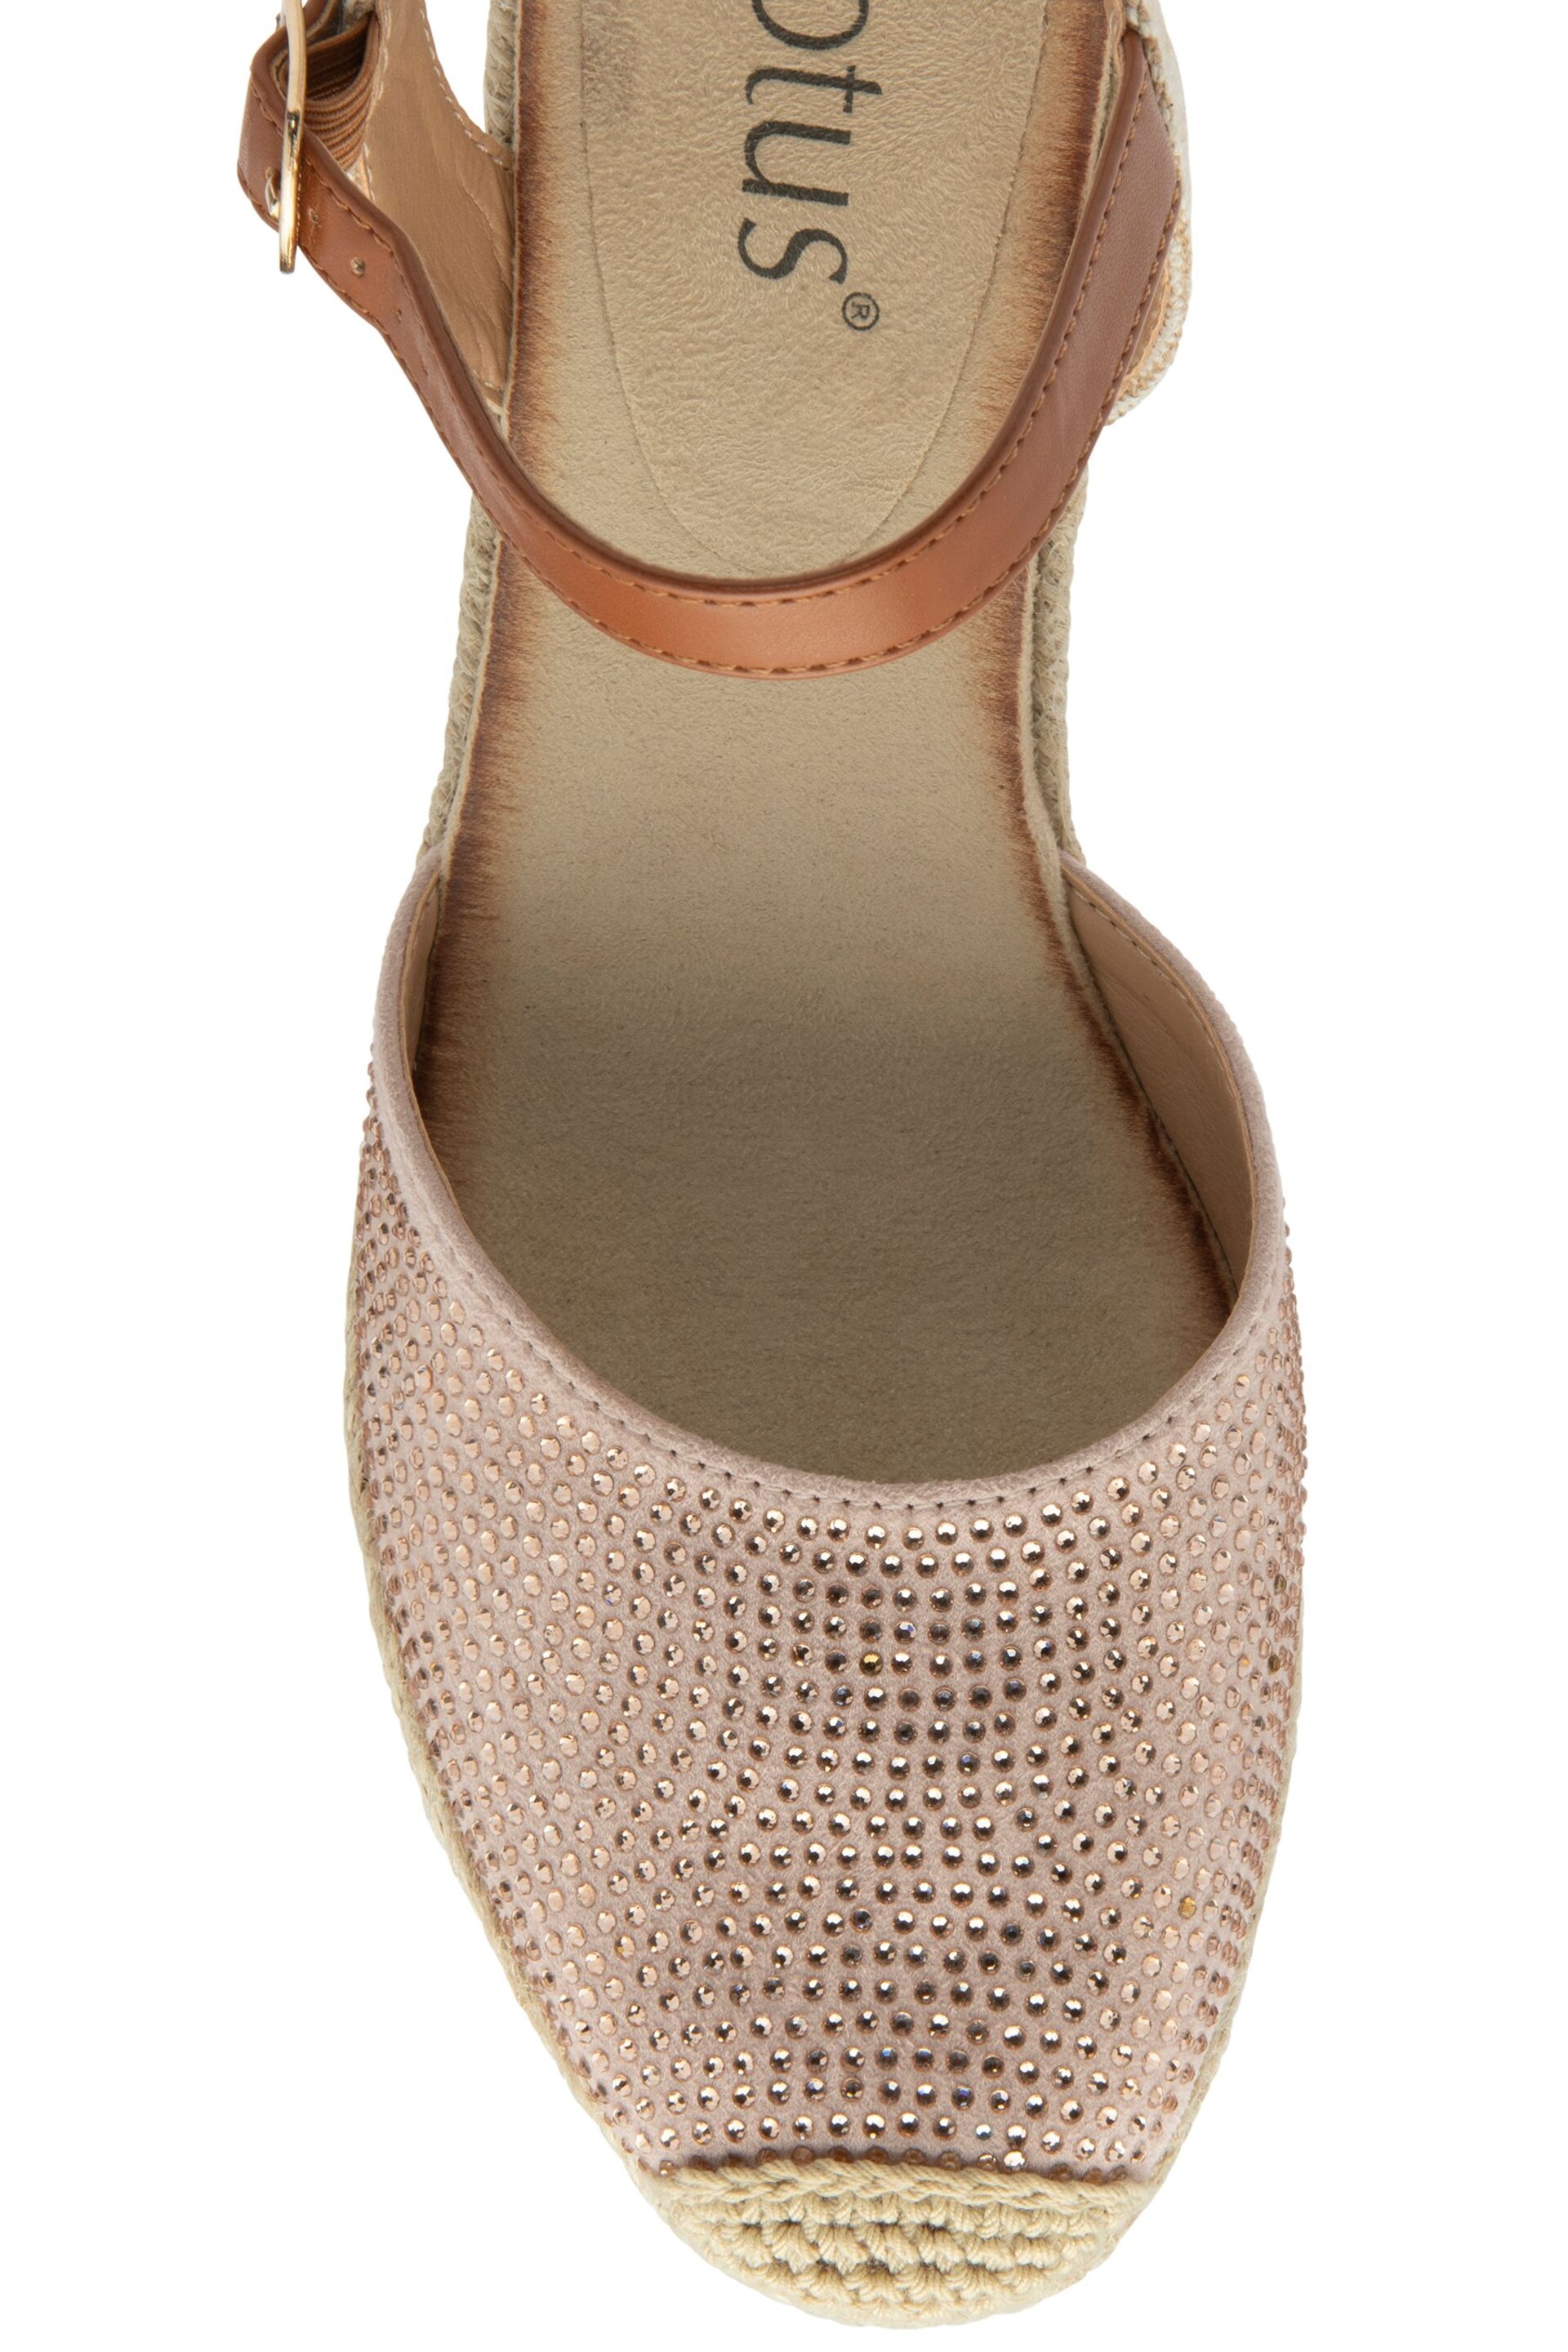 Lotus Pink/Cream Espadrille Wedge Sandals - Image 4 of 4